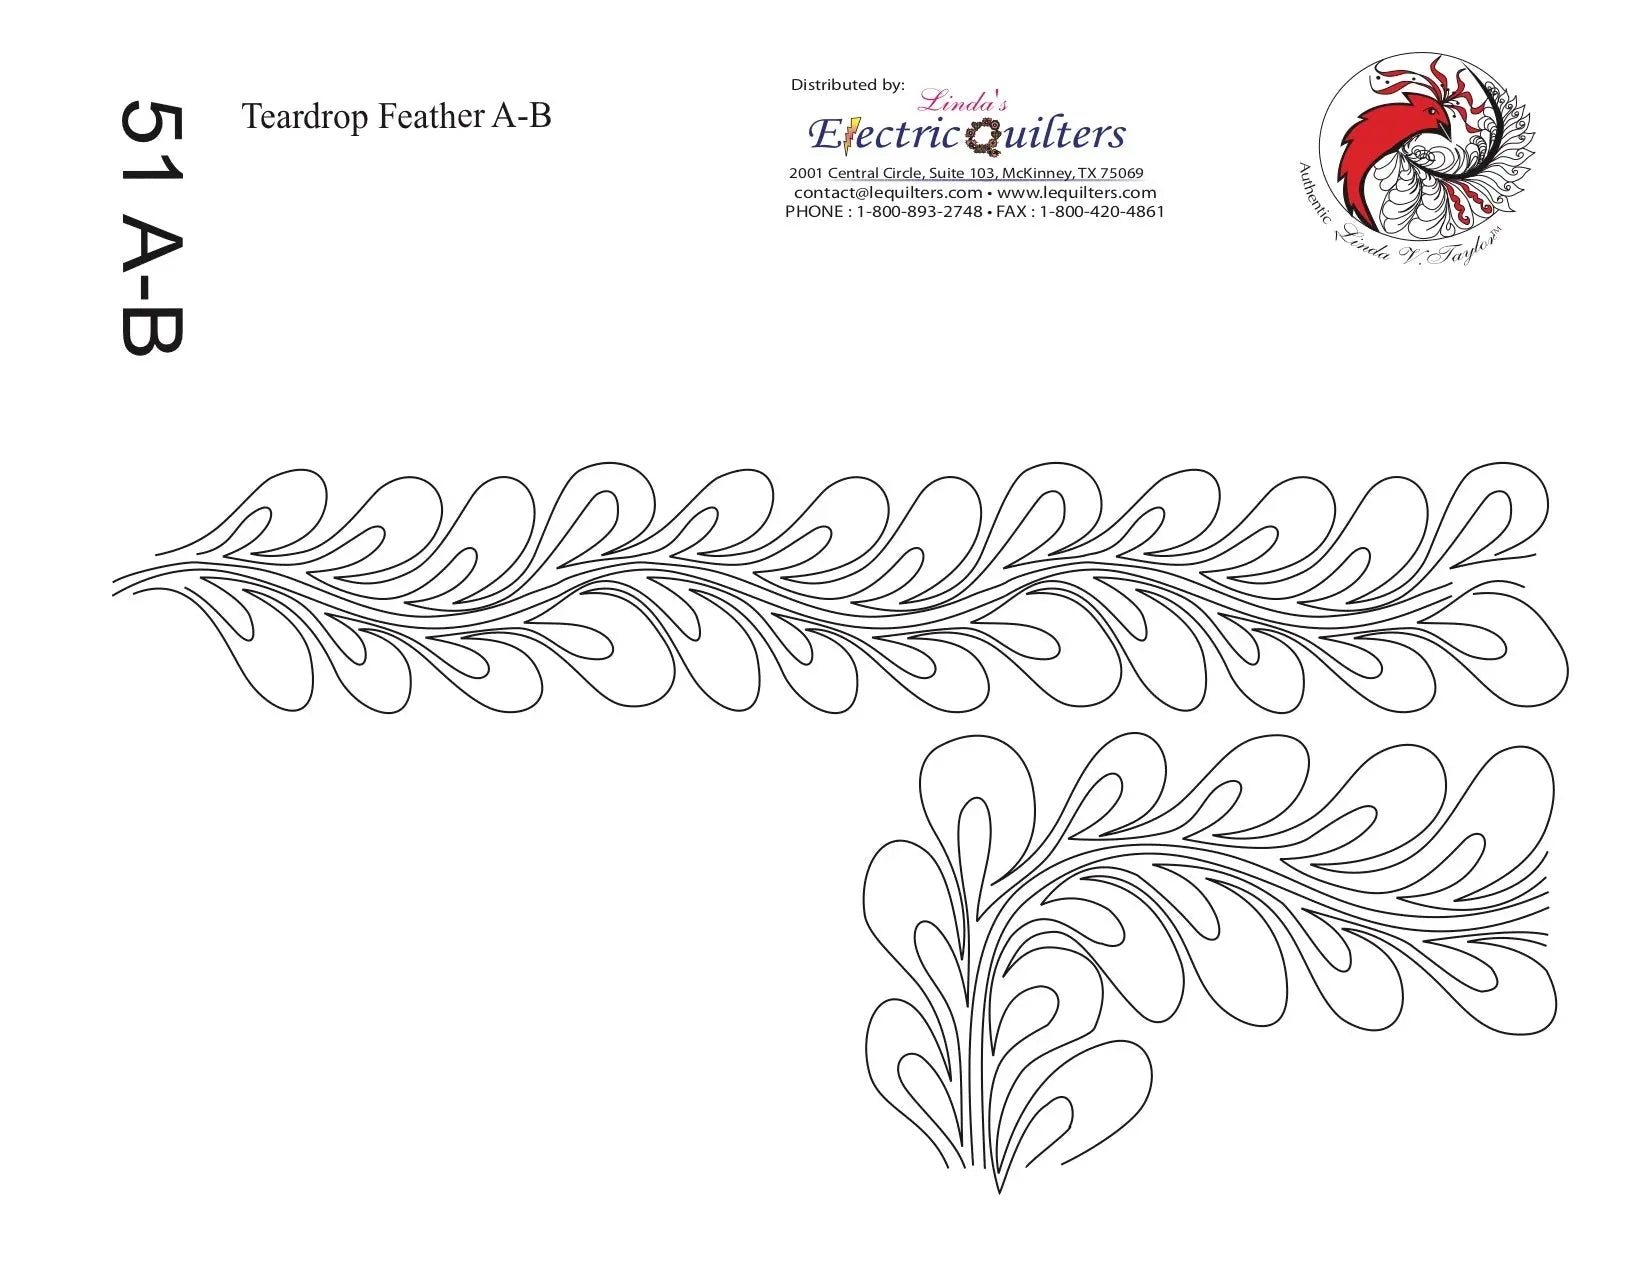 051 Teardrop Feather Pantograph by Linda V. Taylor